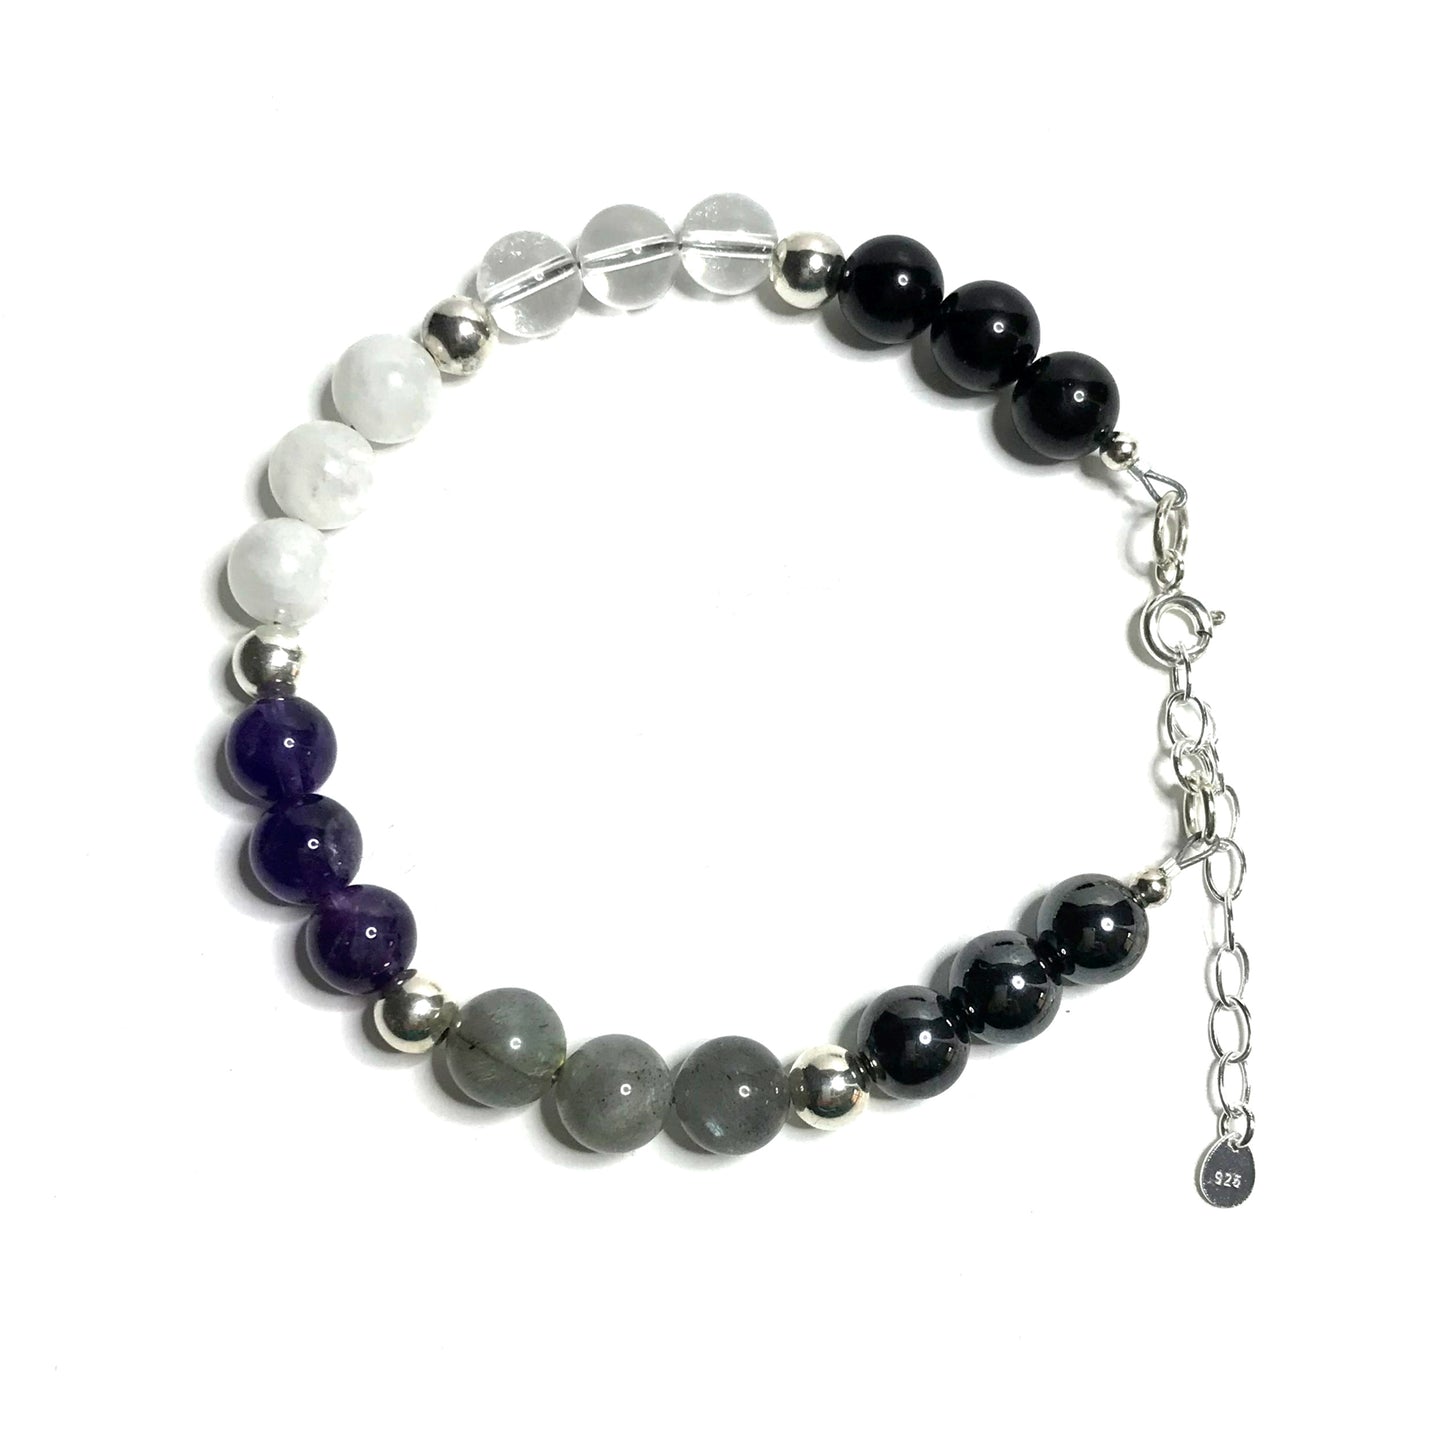 Empath proctection crystal bead bracelet